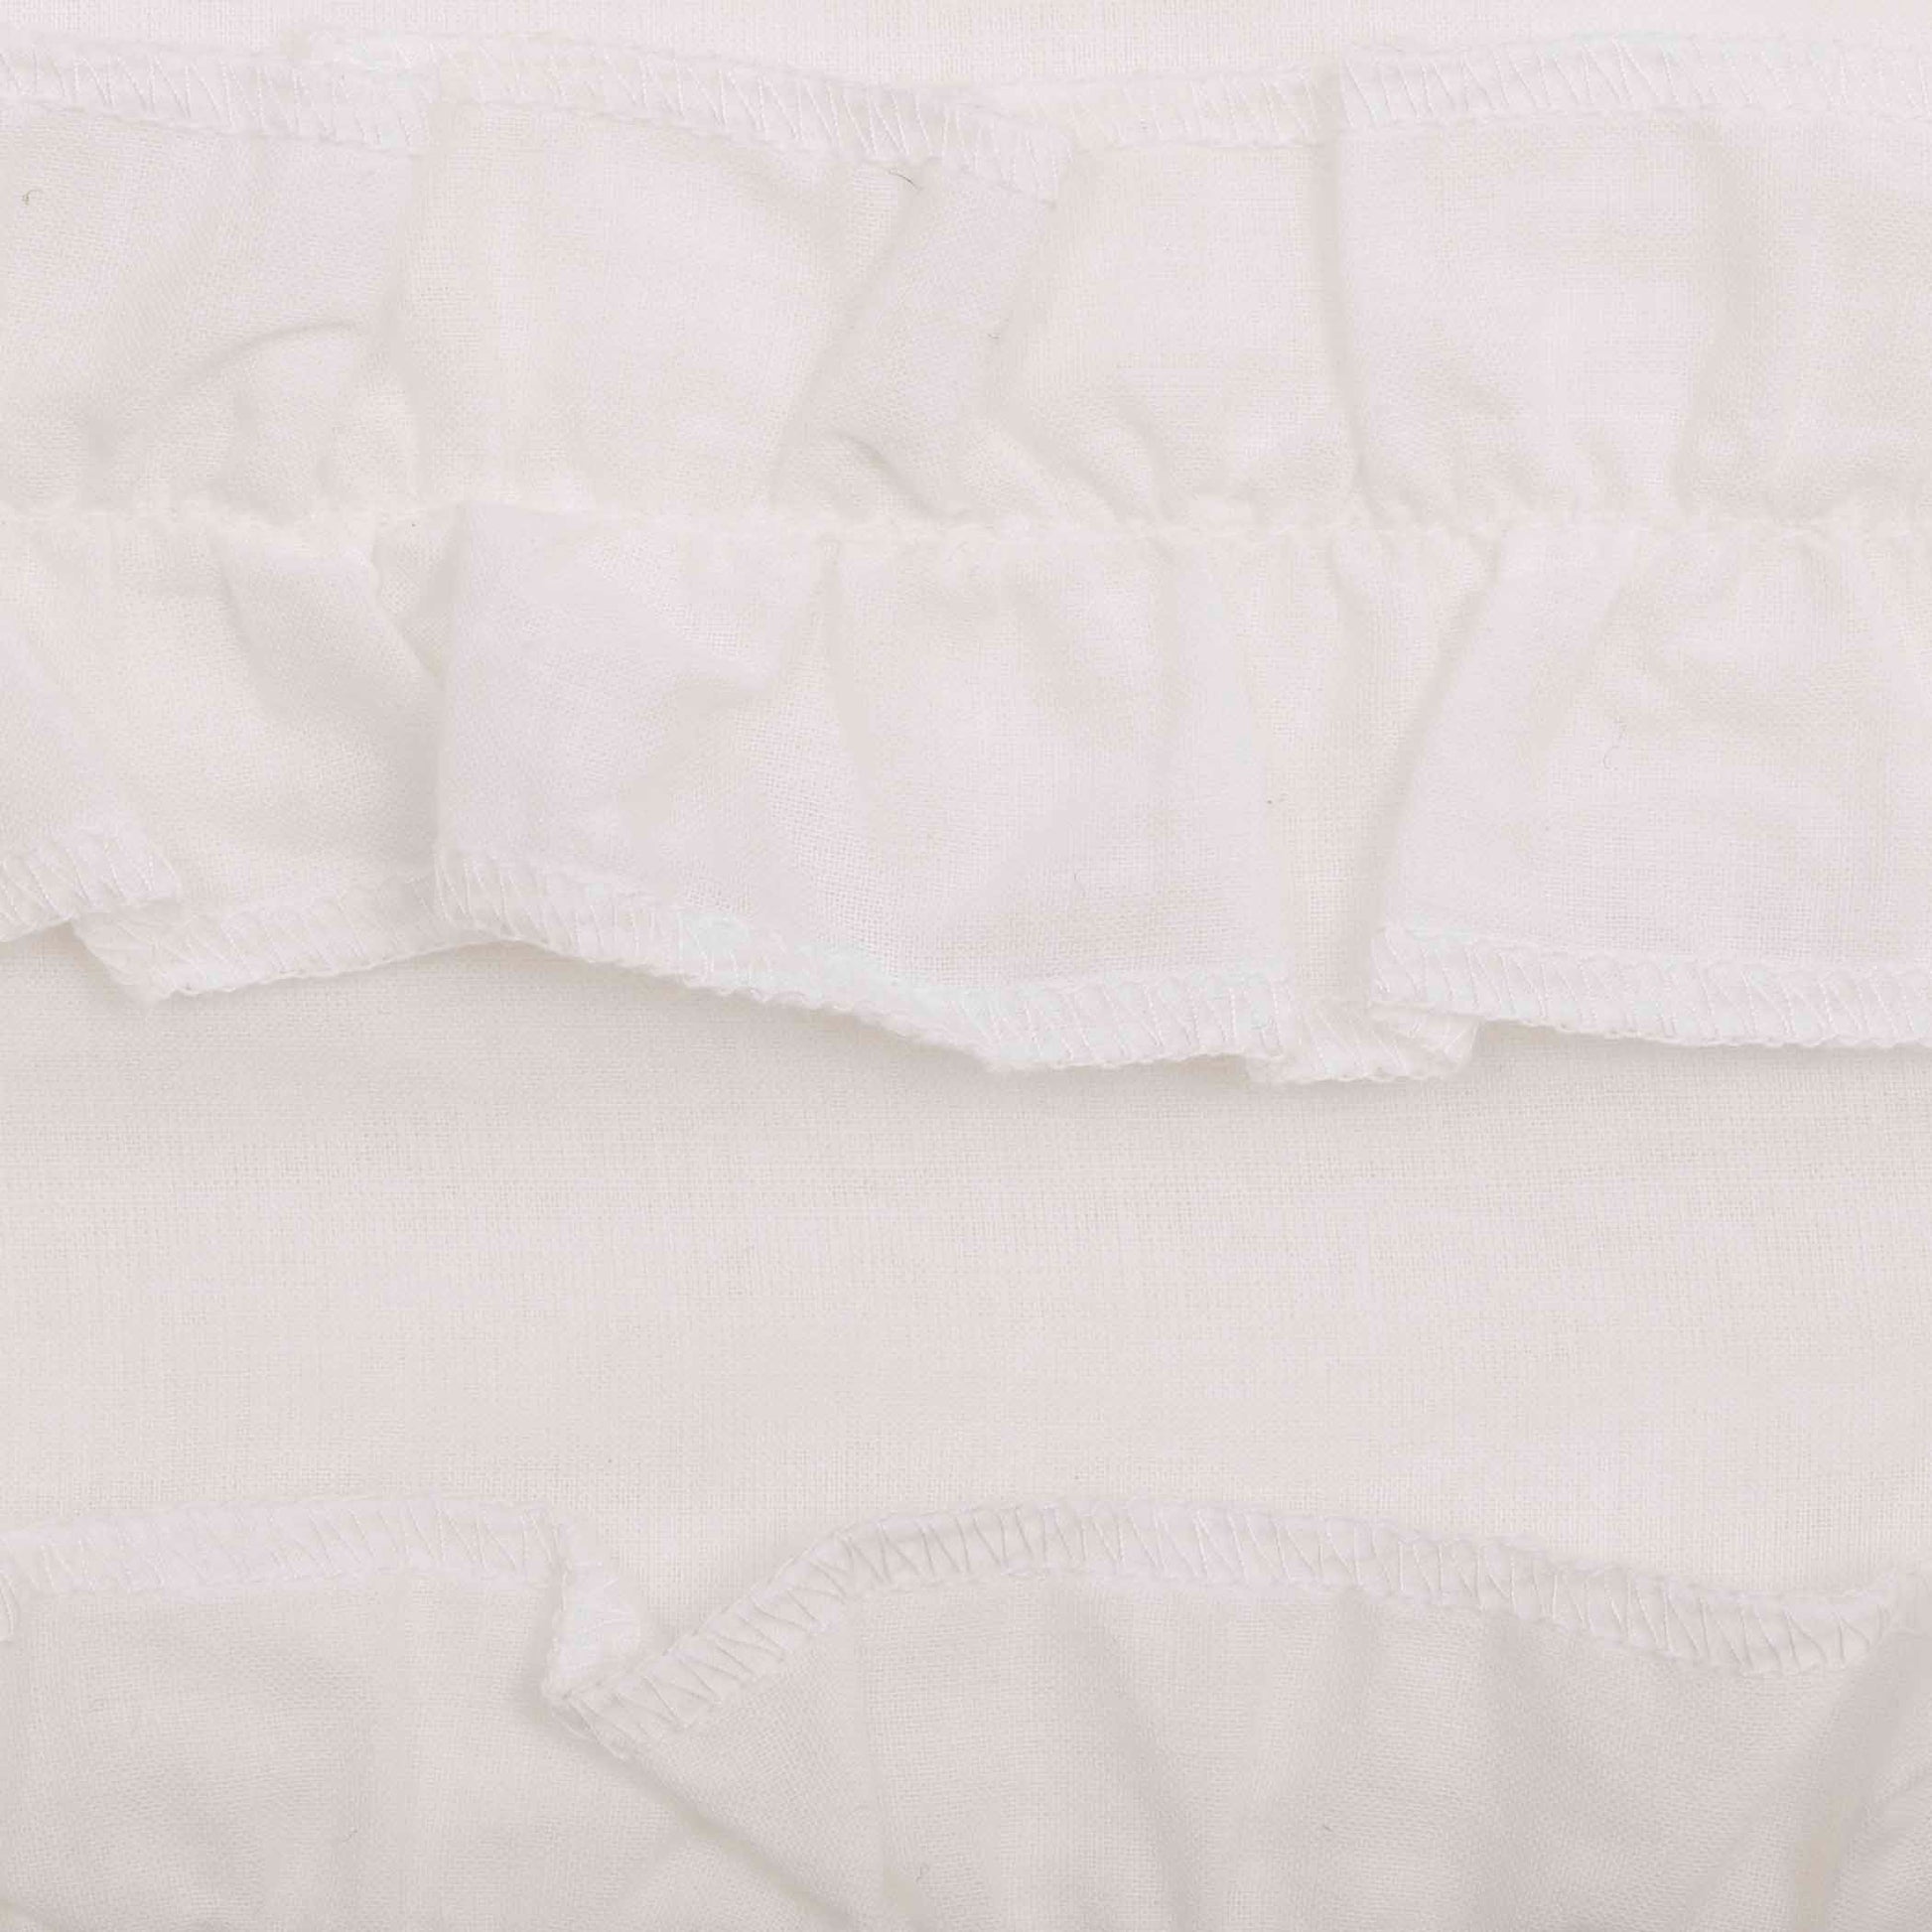 61666-White-Ruffled-Sheer-Petticoat-Valance-16x60-image-8